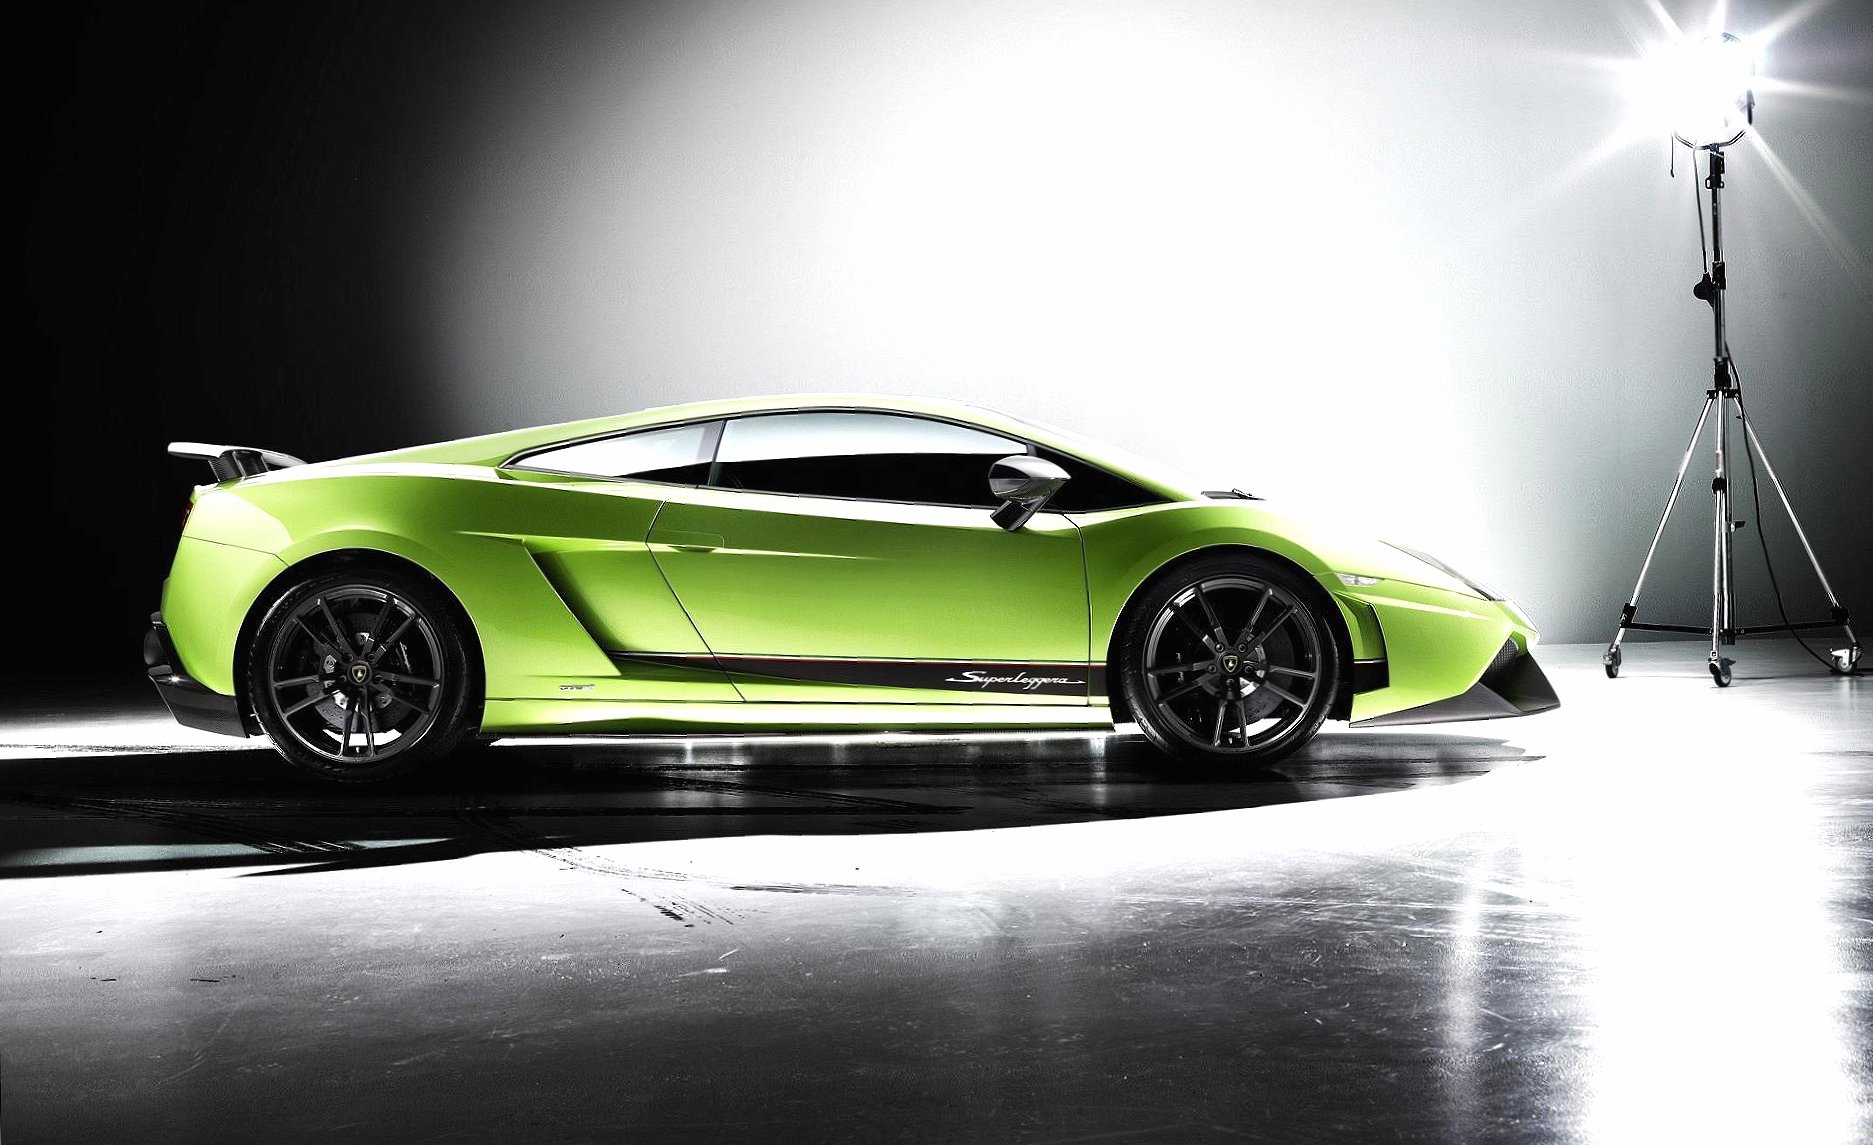 Lamborghini gallardo lp 570 4 superleggera at 320 x 480 iPhone size wallpapers HD quality